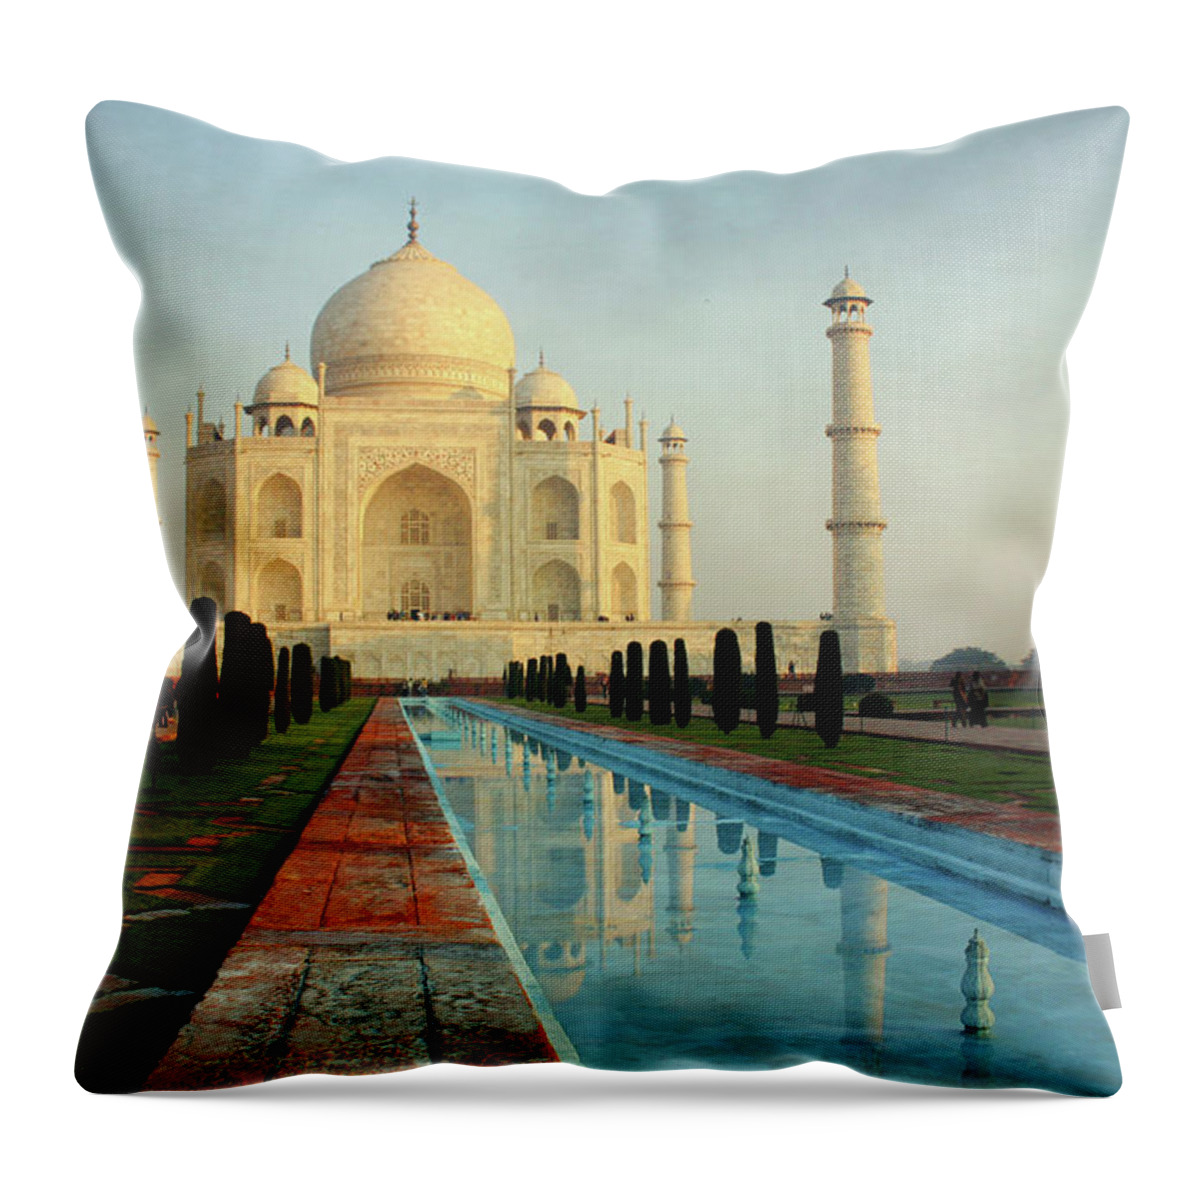 Arch Throw Pillow featuring the photograph Taj Mahal #2 by Atul Tater